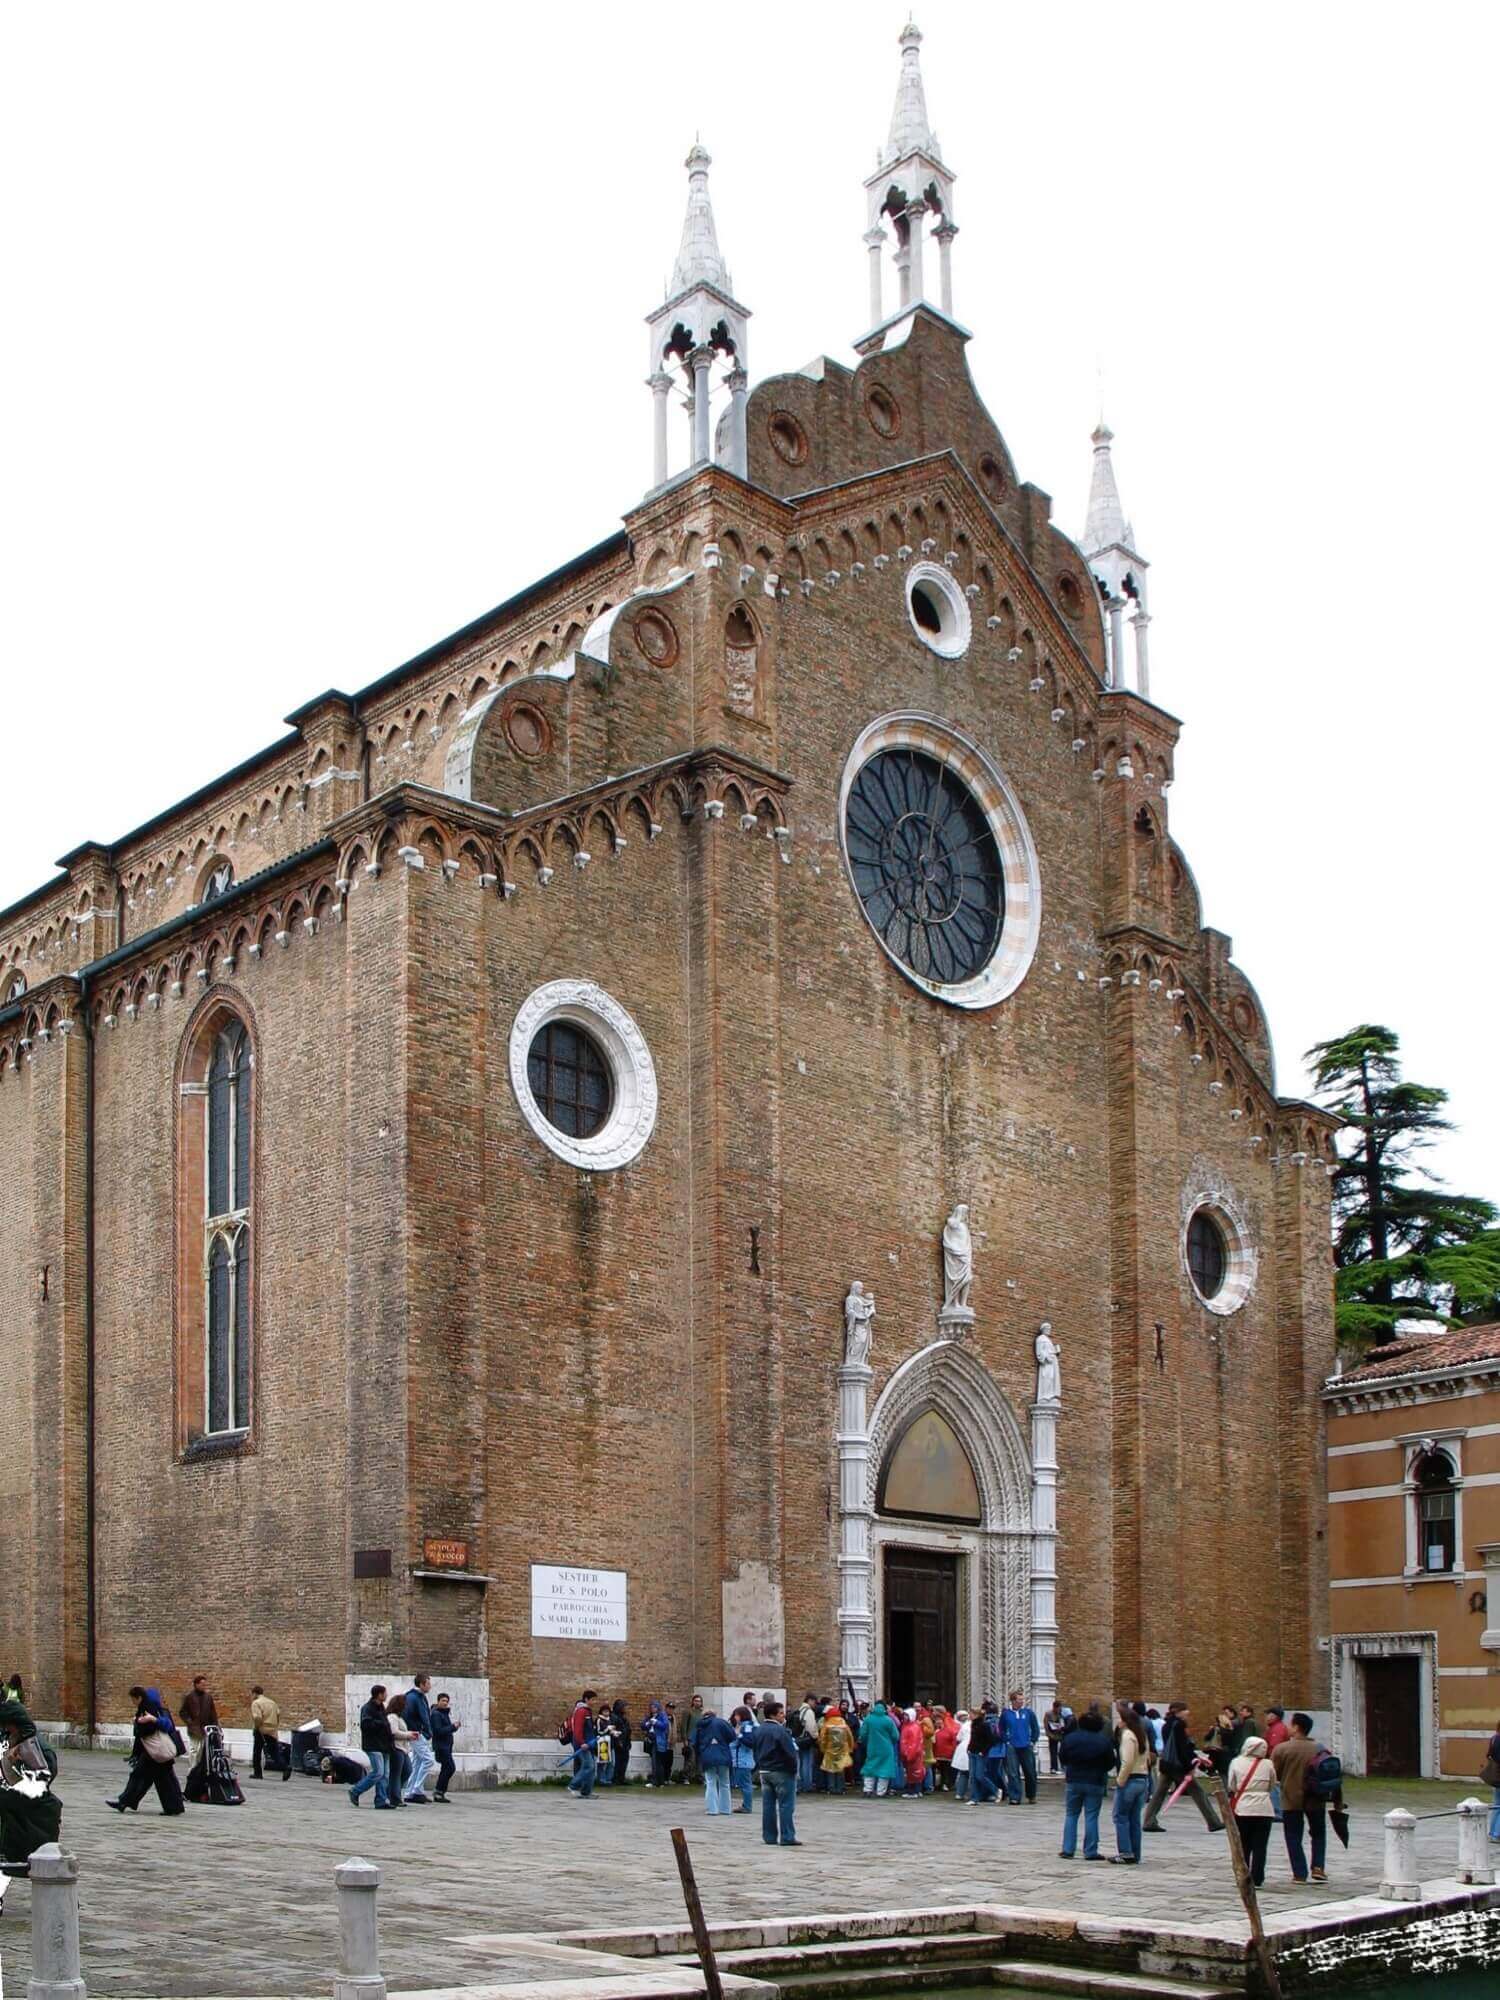 The Santa Maria Gloriosa dei Frari basilica in Venice